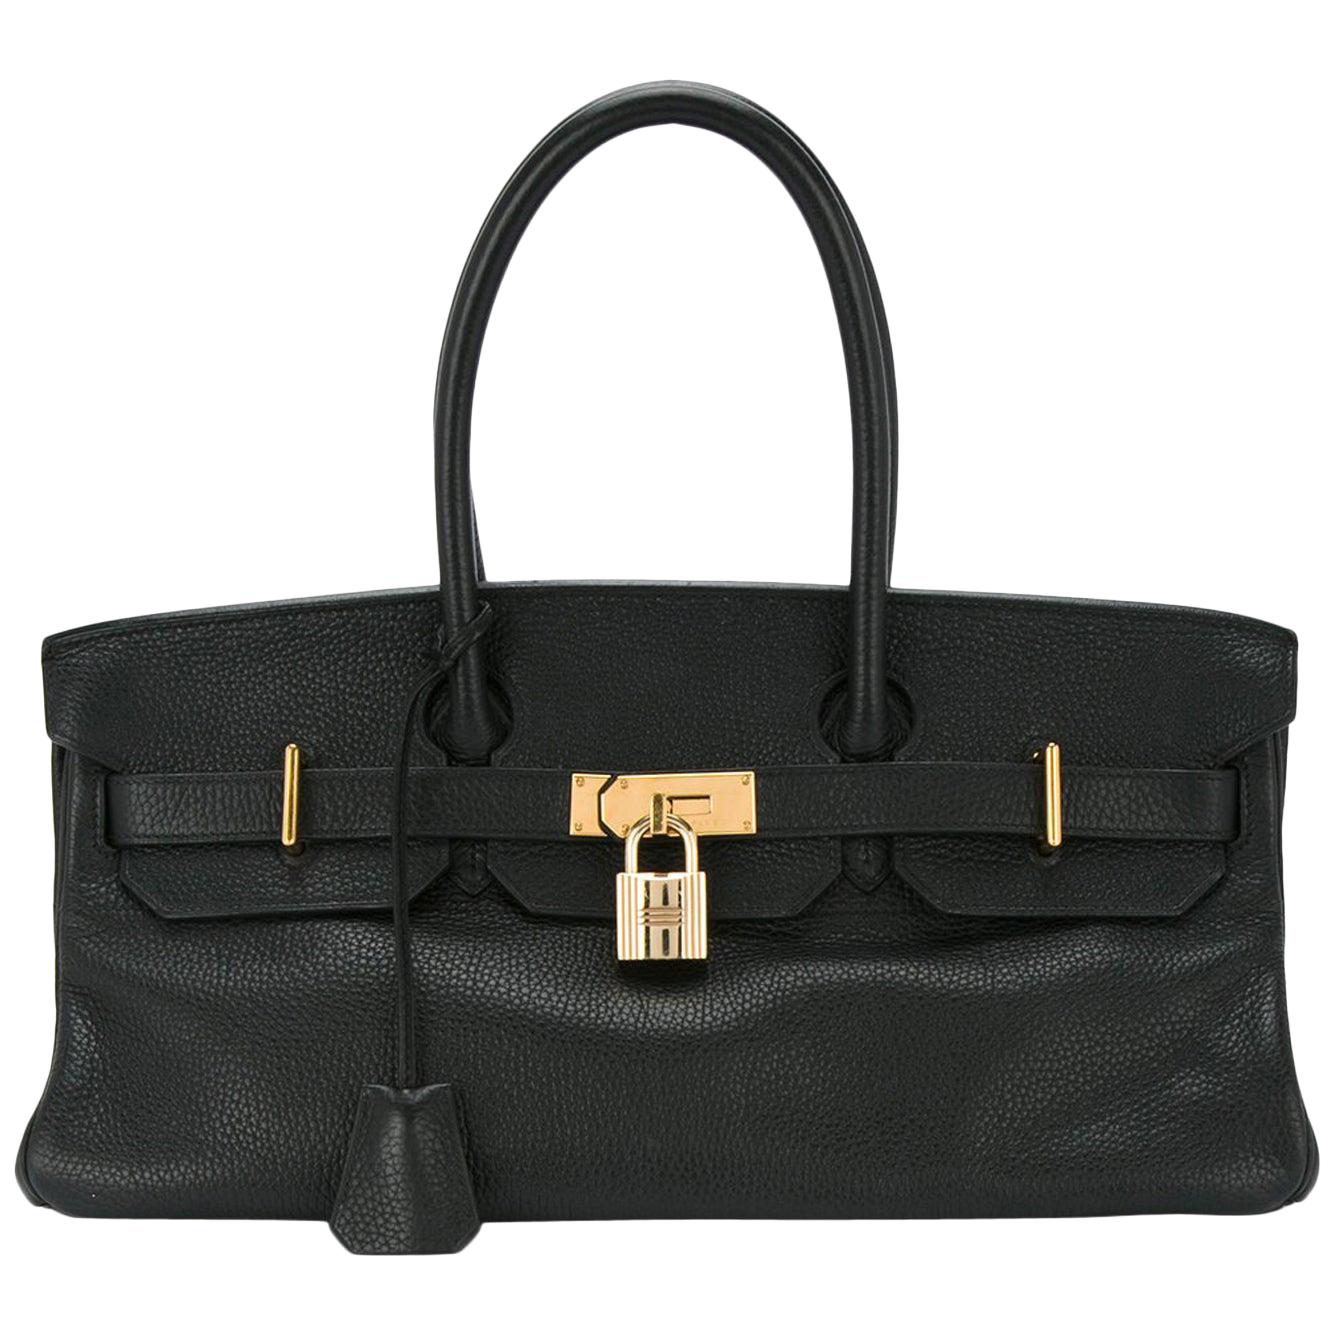 Hermes JPG Birkin Black Leather Gold Hardware Top Handle Satchel Bag